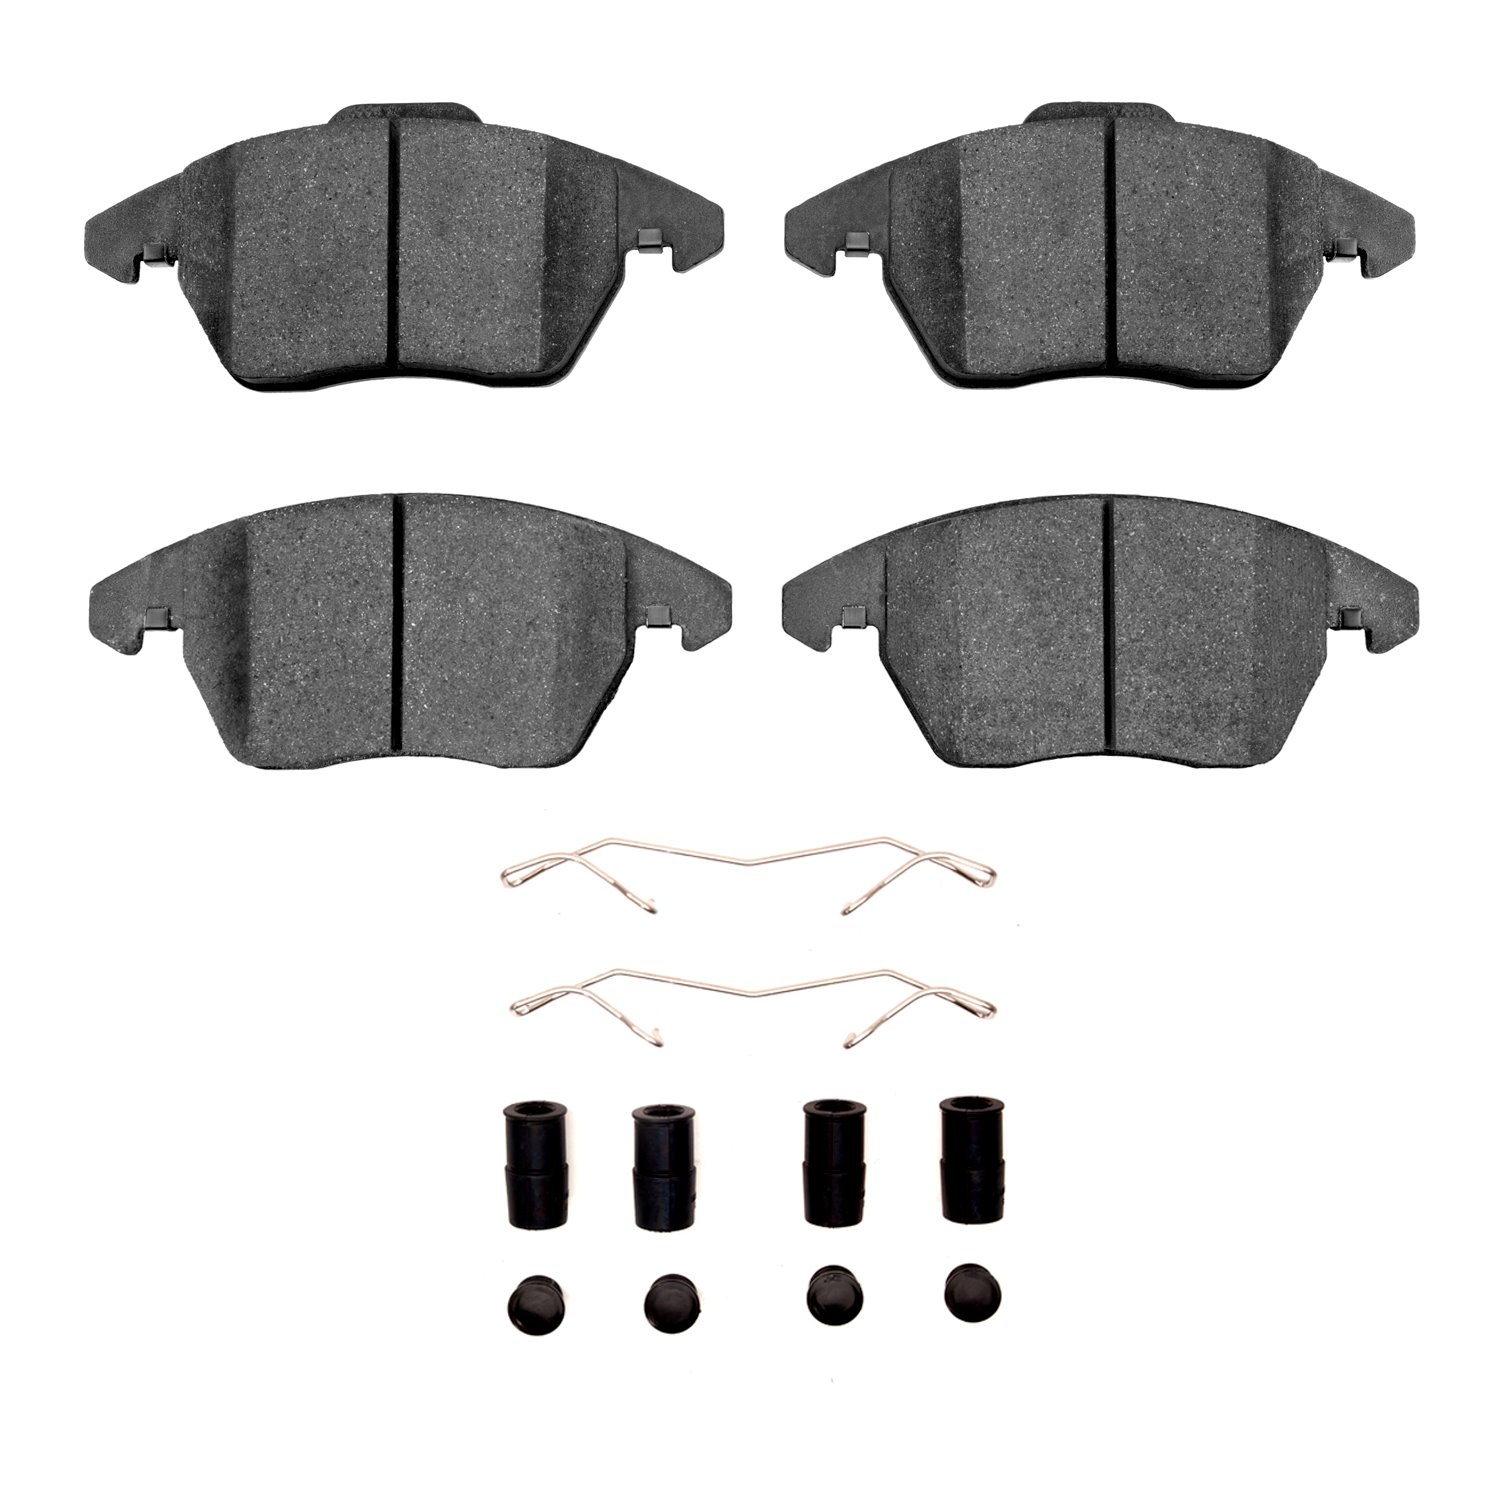 1310-1107-21 3000-Series Ceramic Brake Pads & Hardware Kit, 2005-2019 Audi/Volkswagen, Position: Front